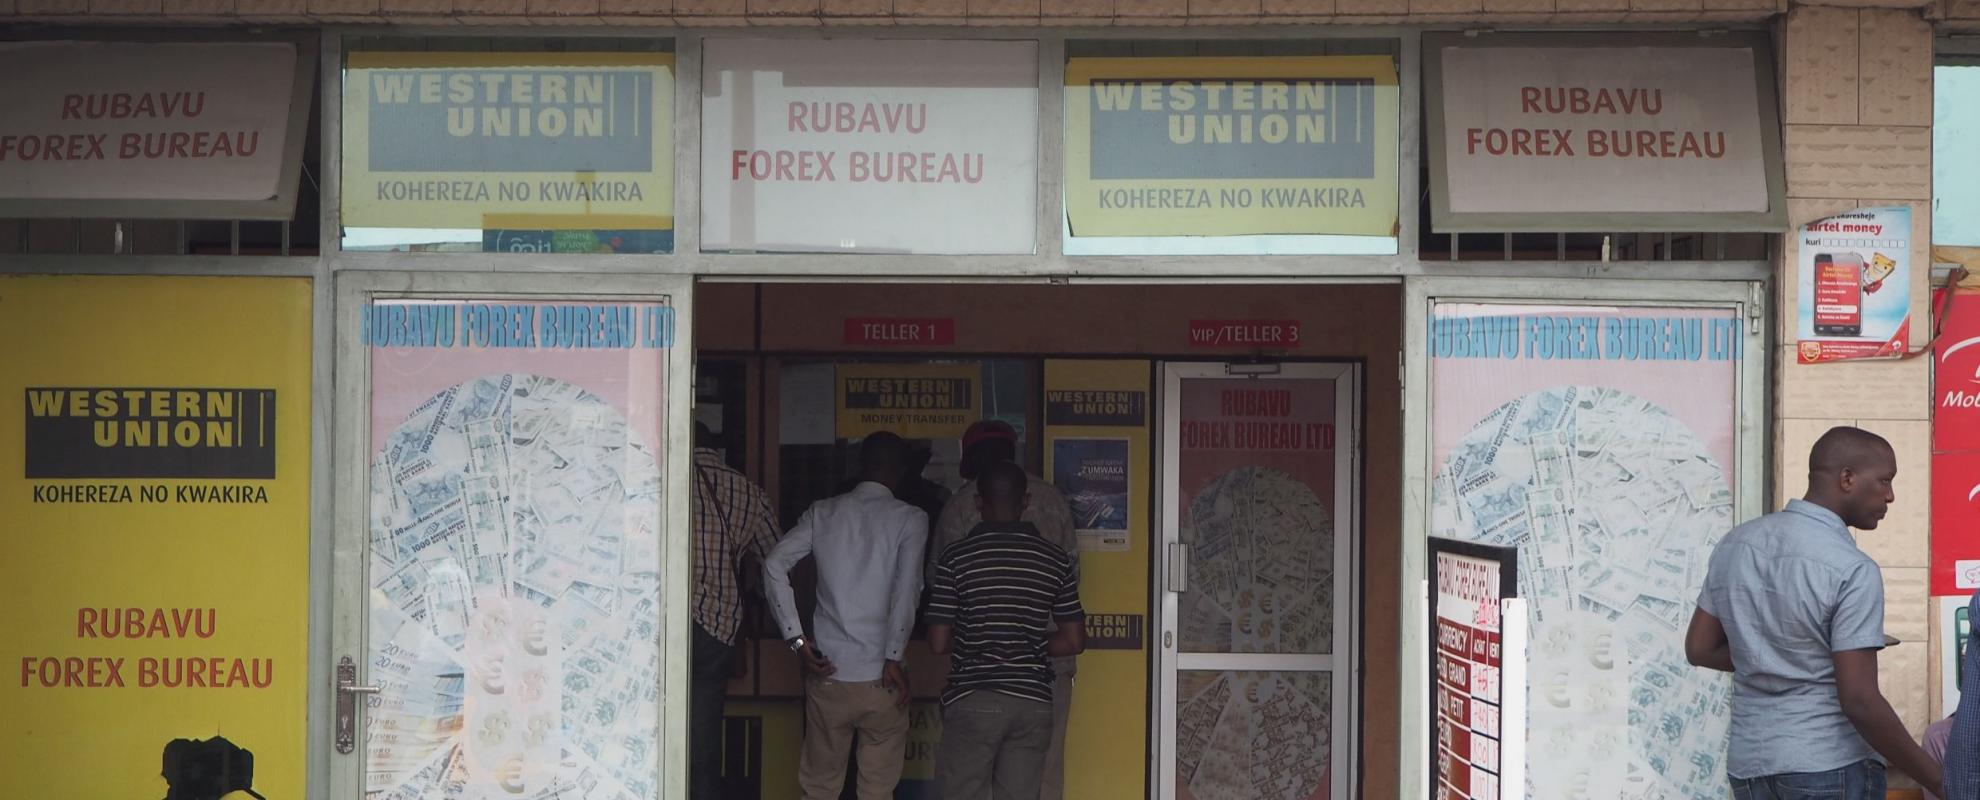 Wisselkantoor in Rwanda  © Monito - Money Transfer Comparison